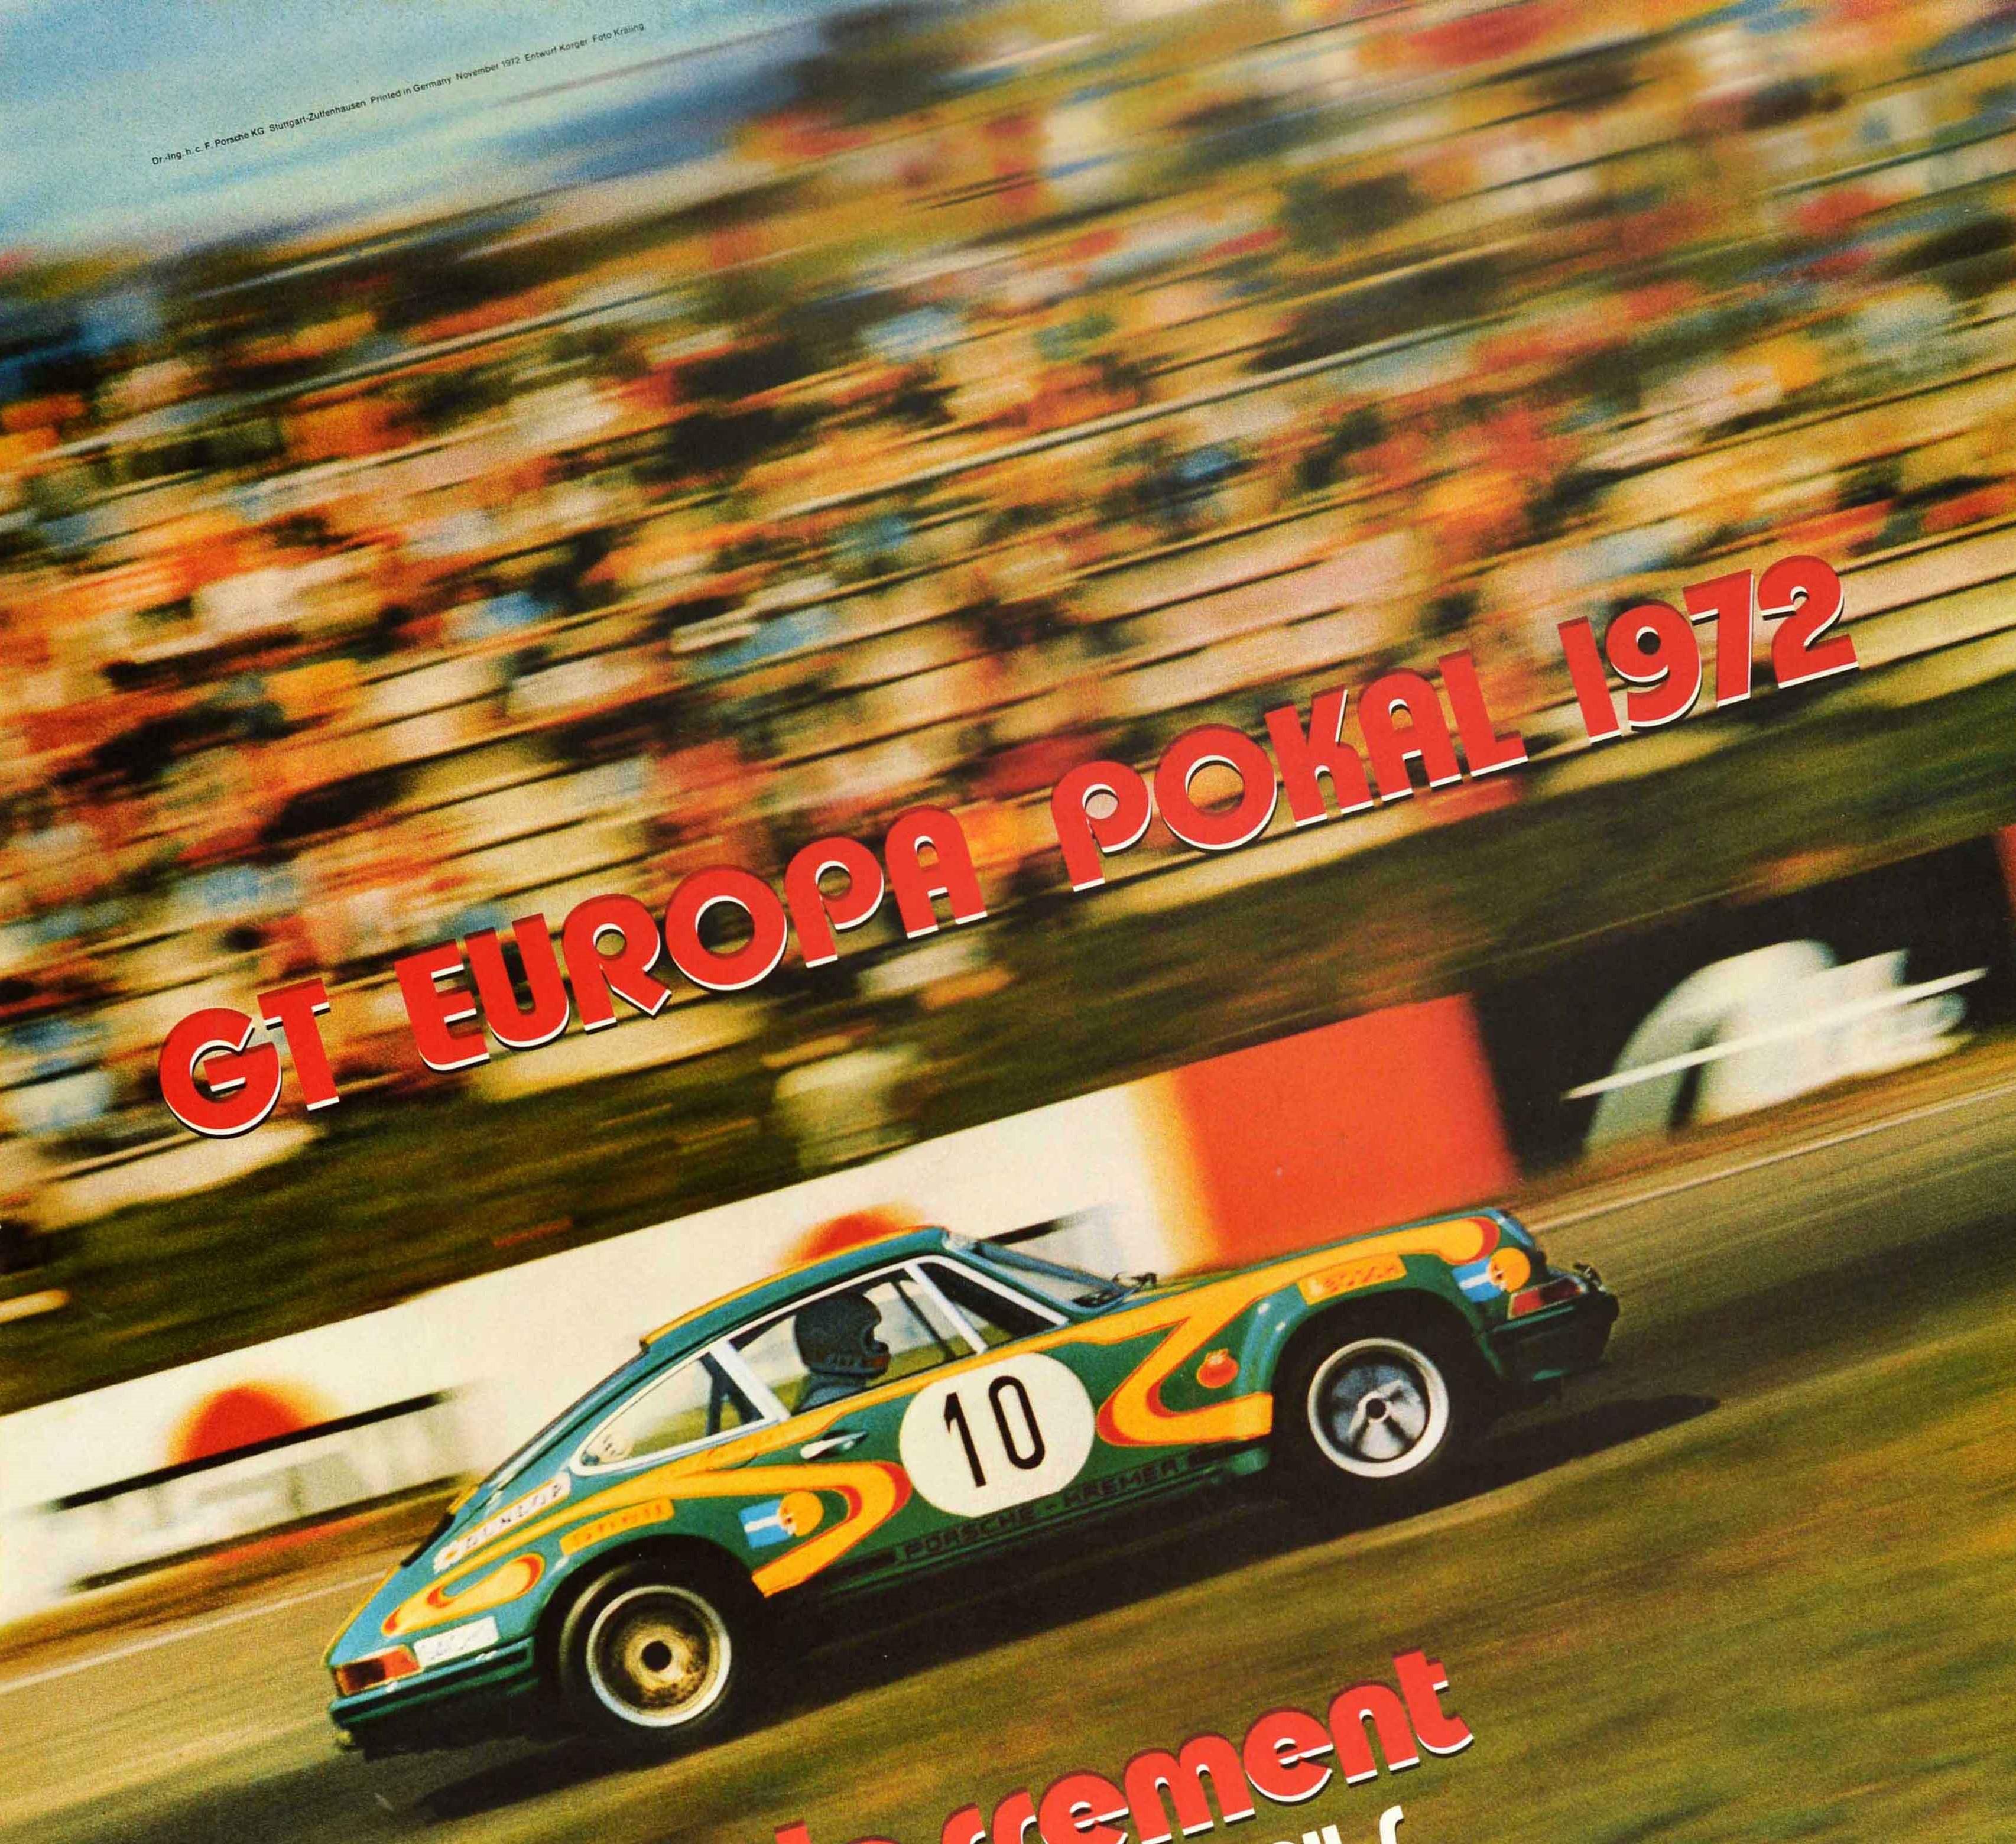 Original Vintage Auto Racing Poster Porsche 911 GT Europa Pokal 1972 Europe Cup - Print by Korger